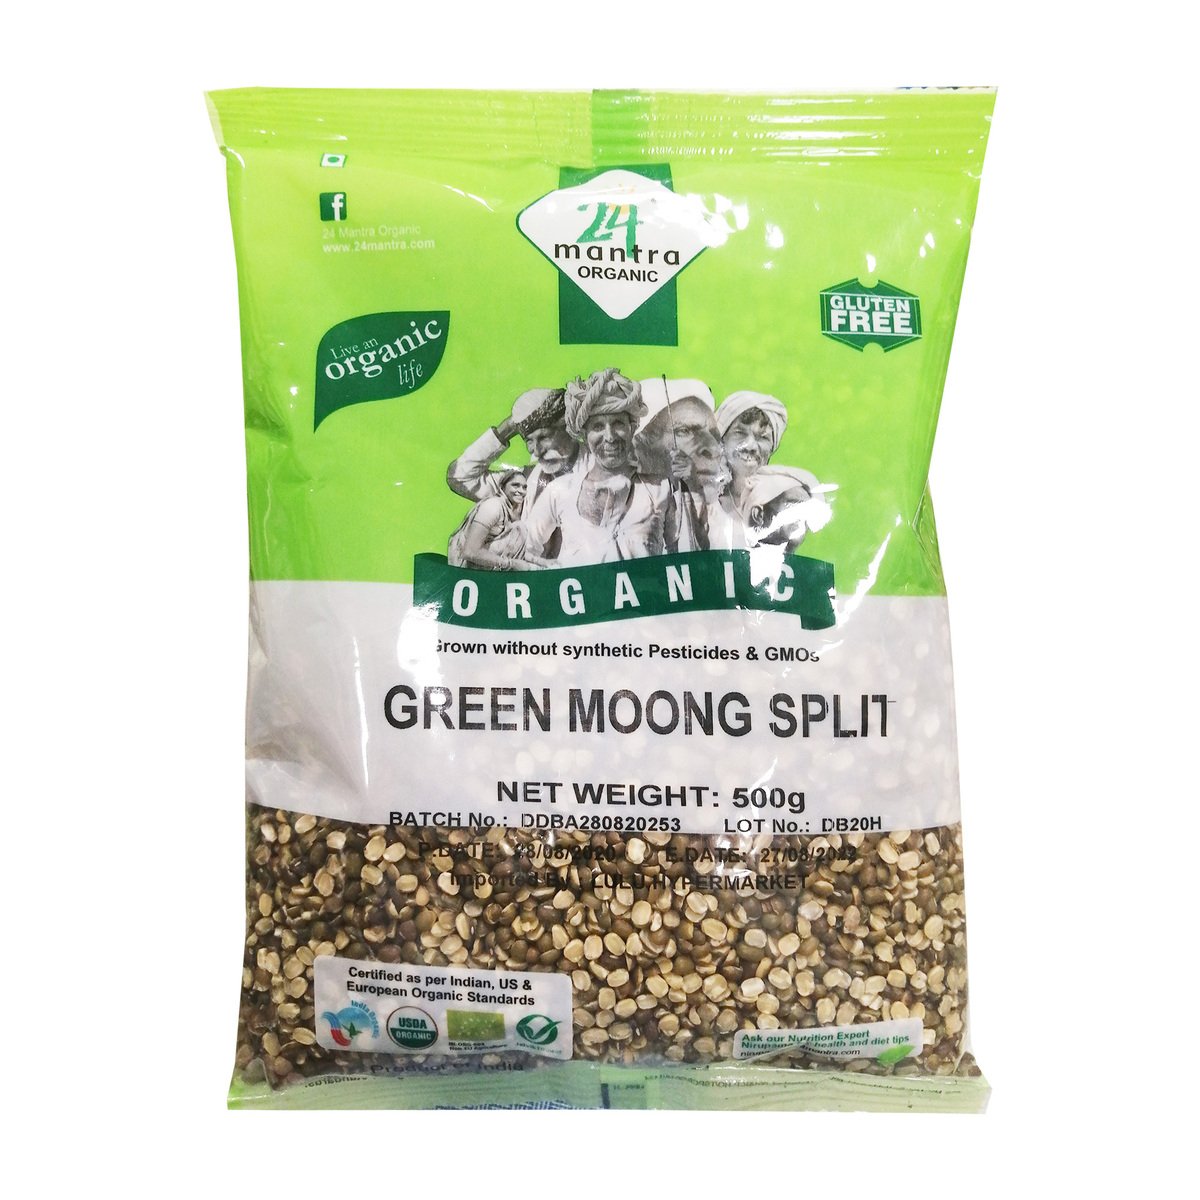 24 Mantra Organic Green Moong Split 500 g